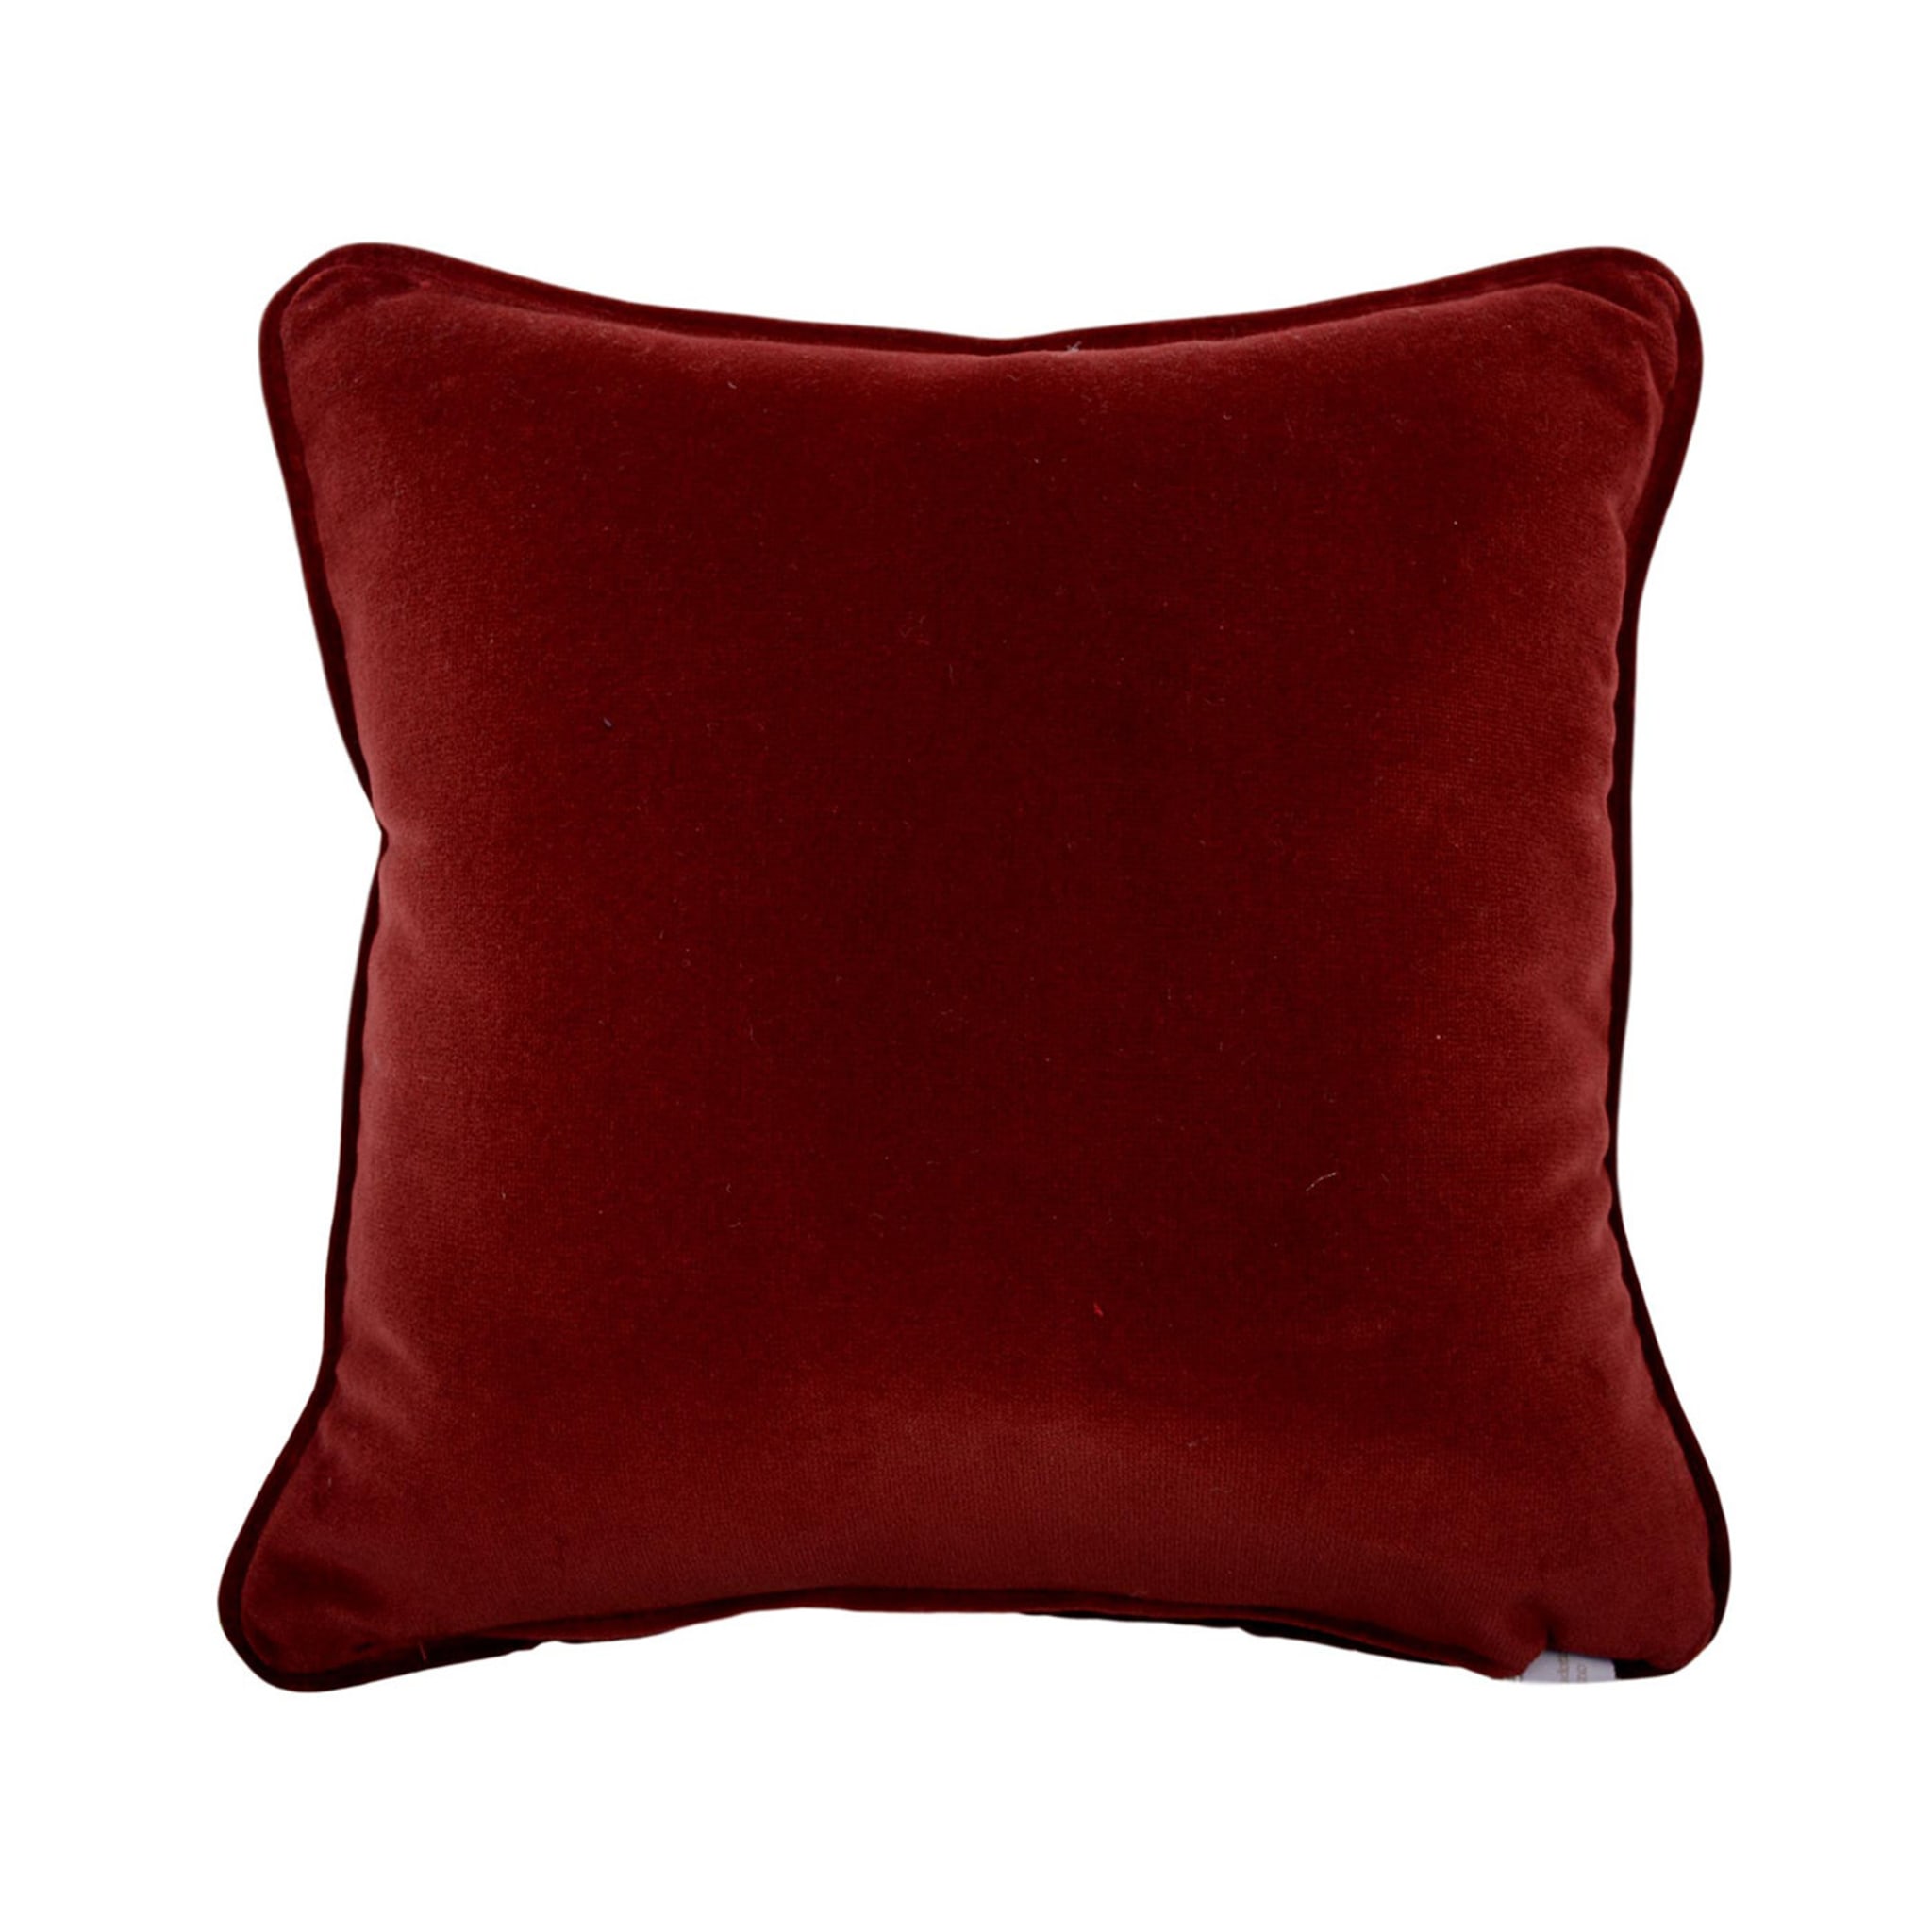 Coussin Carrè rouge en tissu jacquard à micro motifs - Vue alternative 2